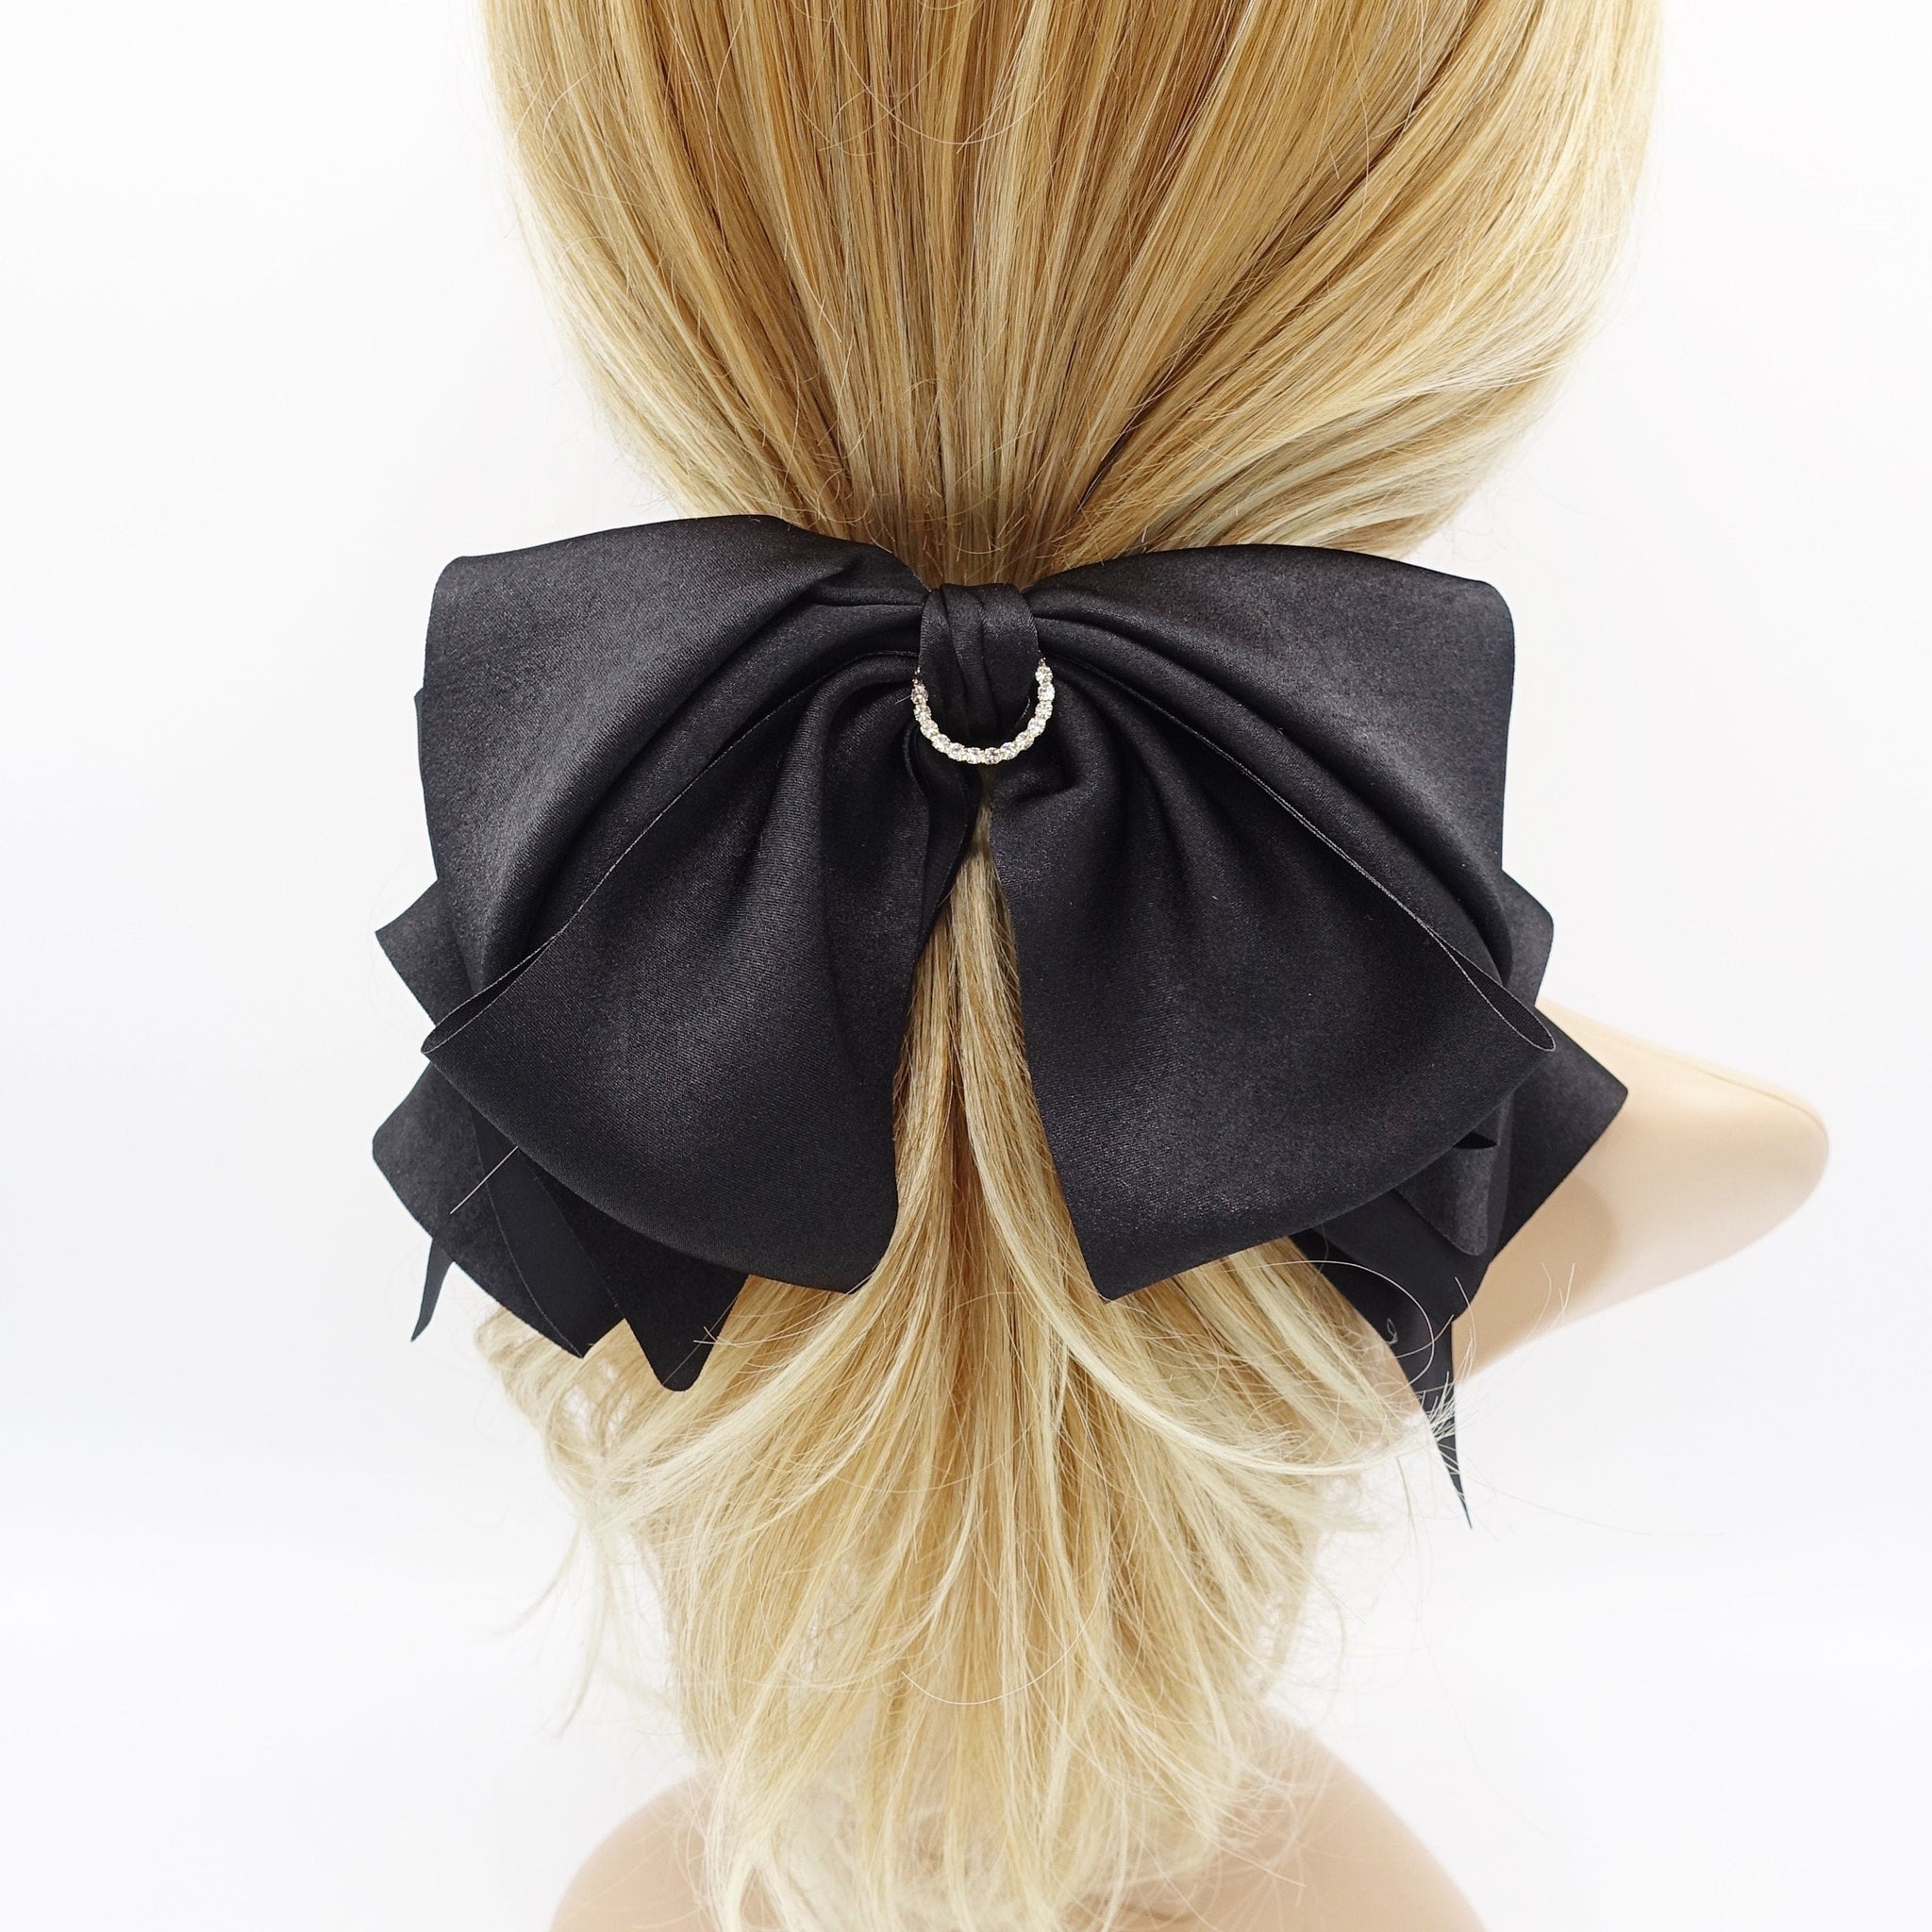 veryshine.com Barrette (Bow) Black satin hair bow, layered hair bow, rhinestone hair bow for women